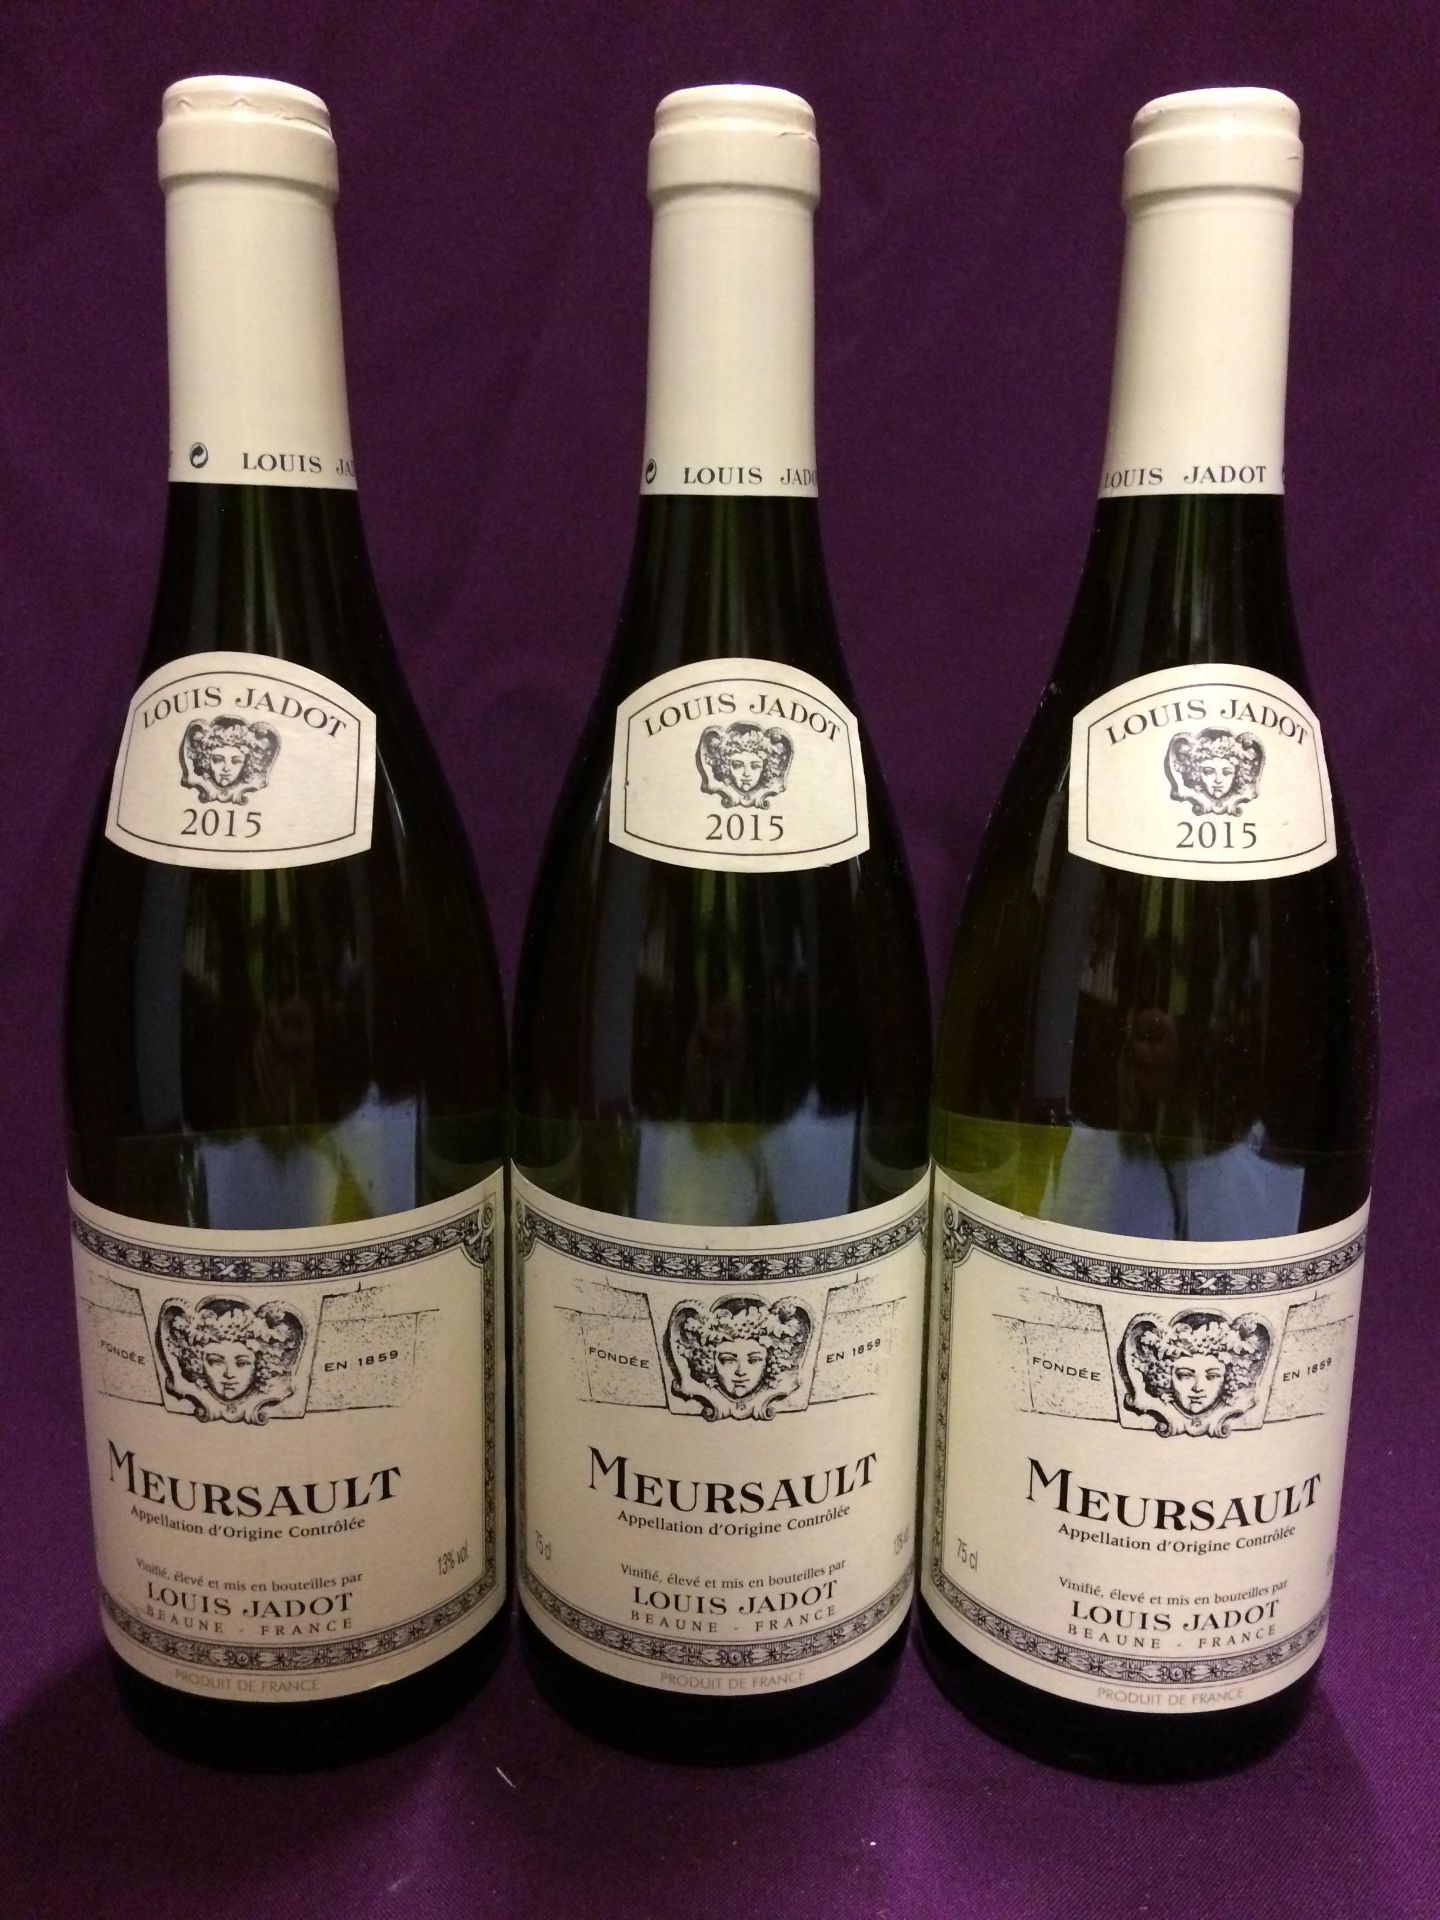 3 x 75cl bottles of Louis Jadot 2015 Meursault